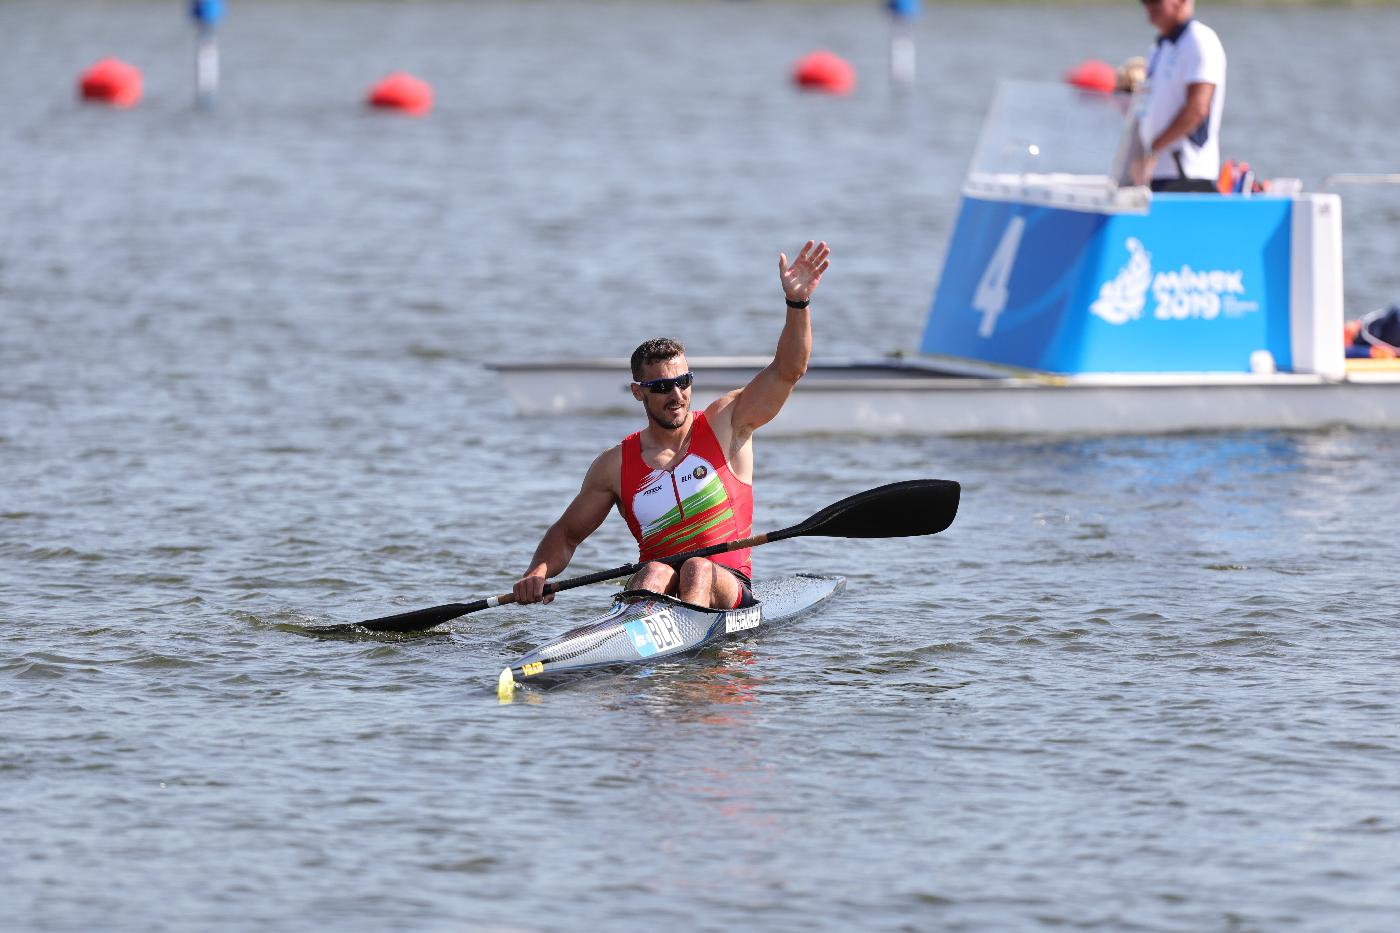 Minsk 2019. Sprint canoeist Aleh Yurenia claims bronze at 2nd European Games!